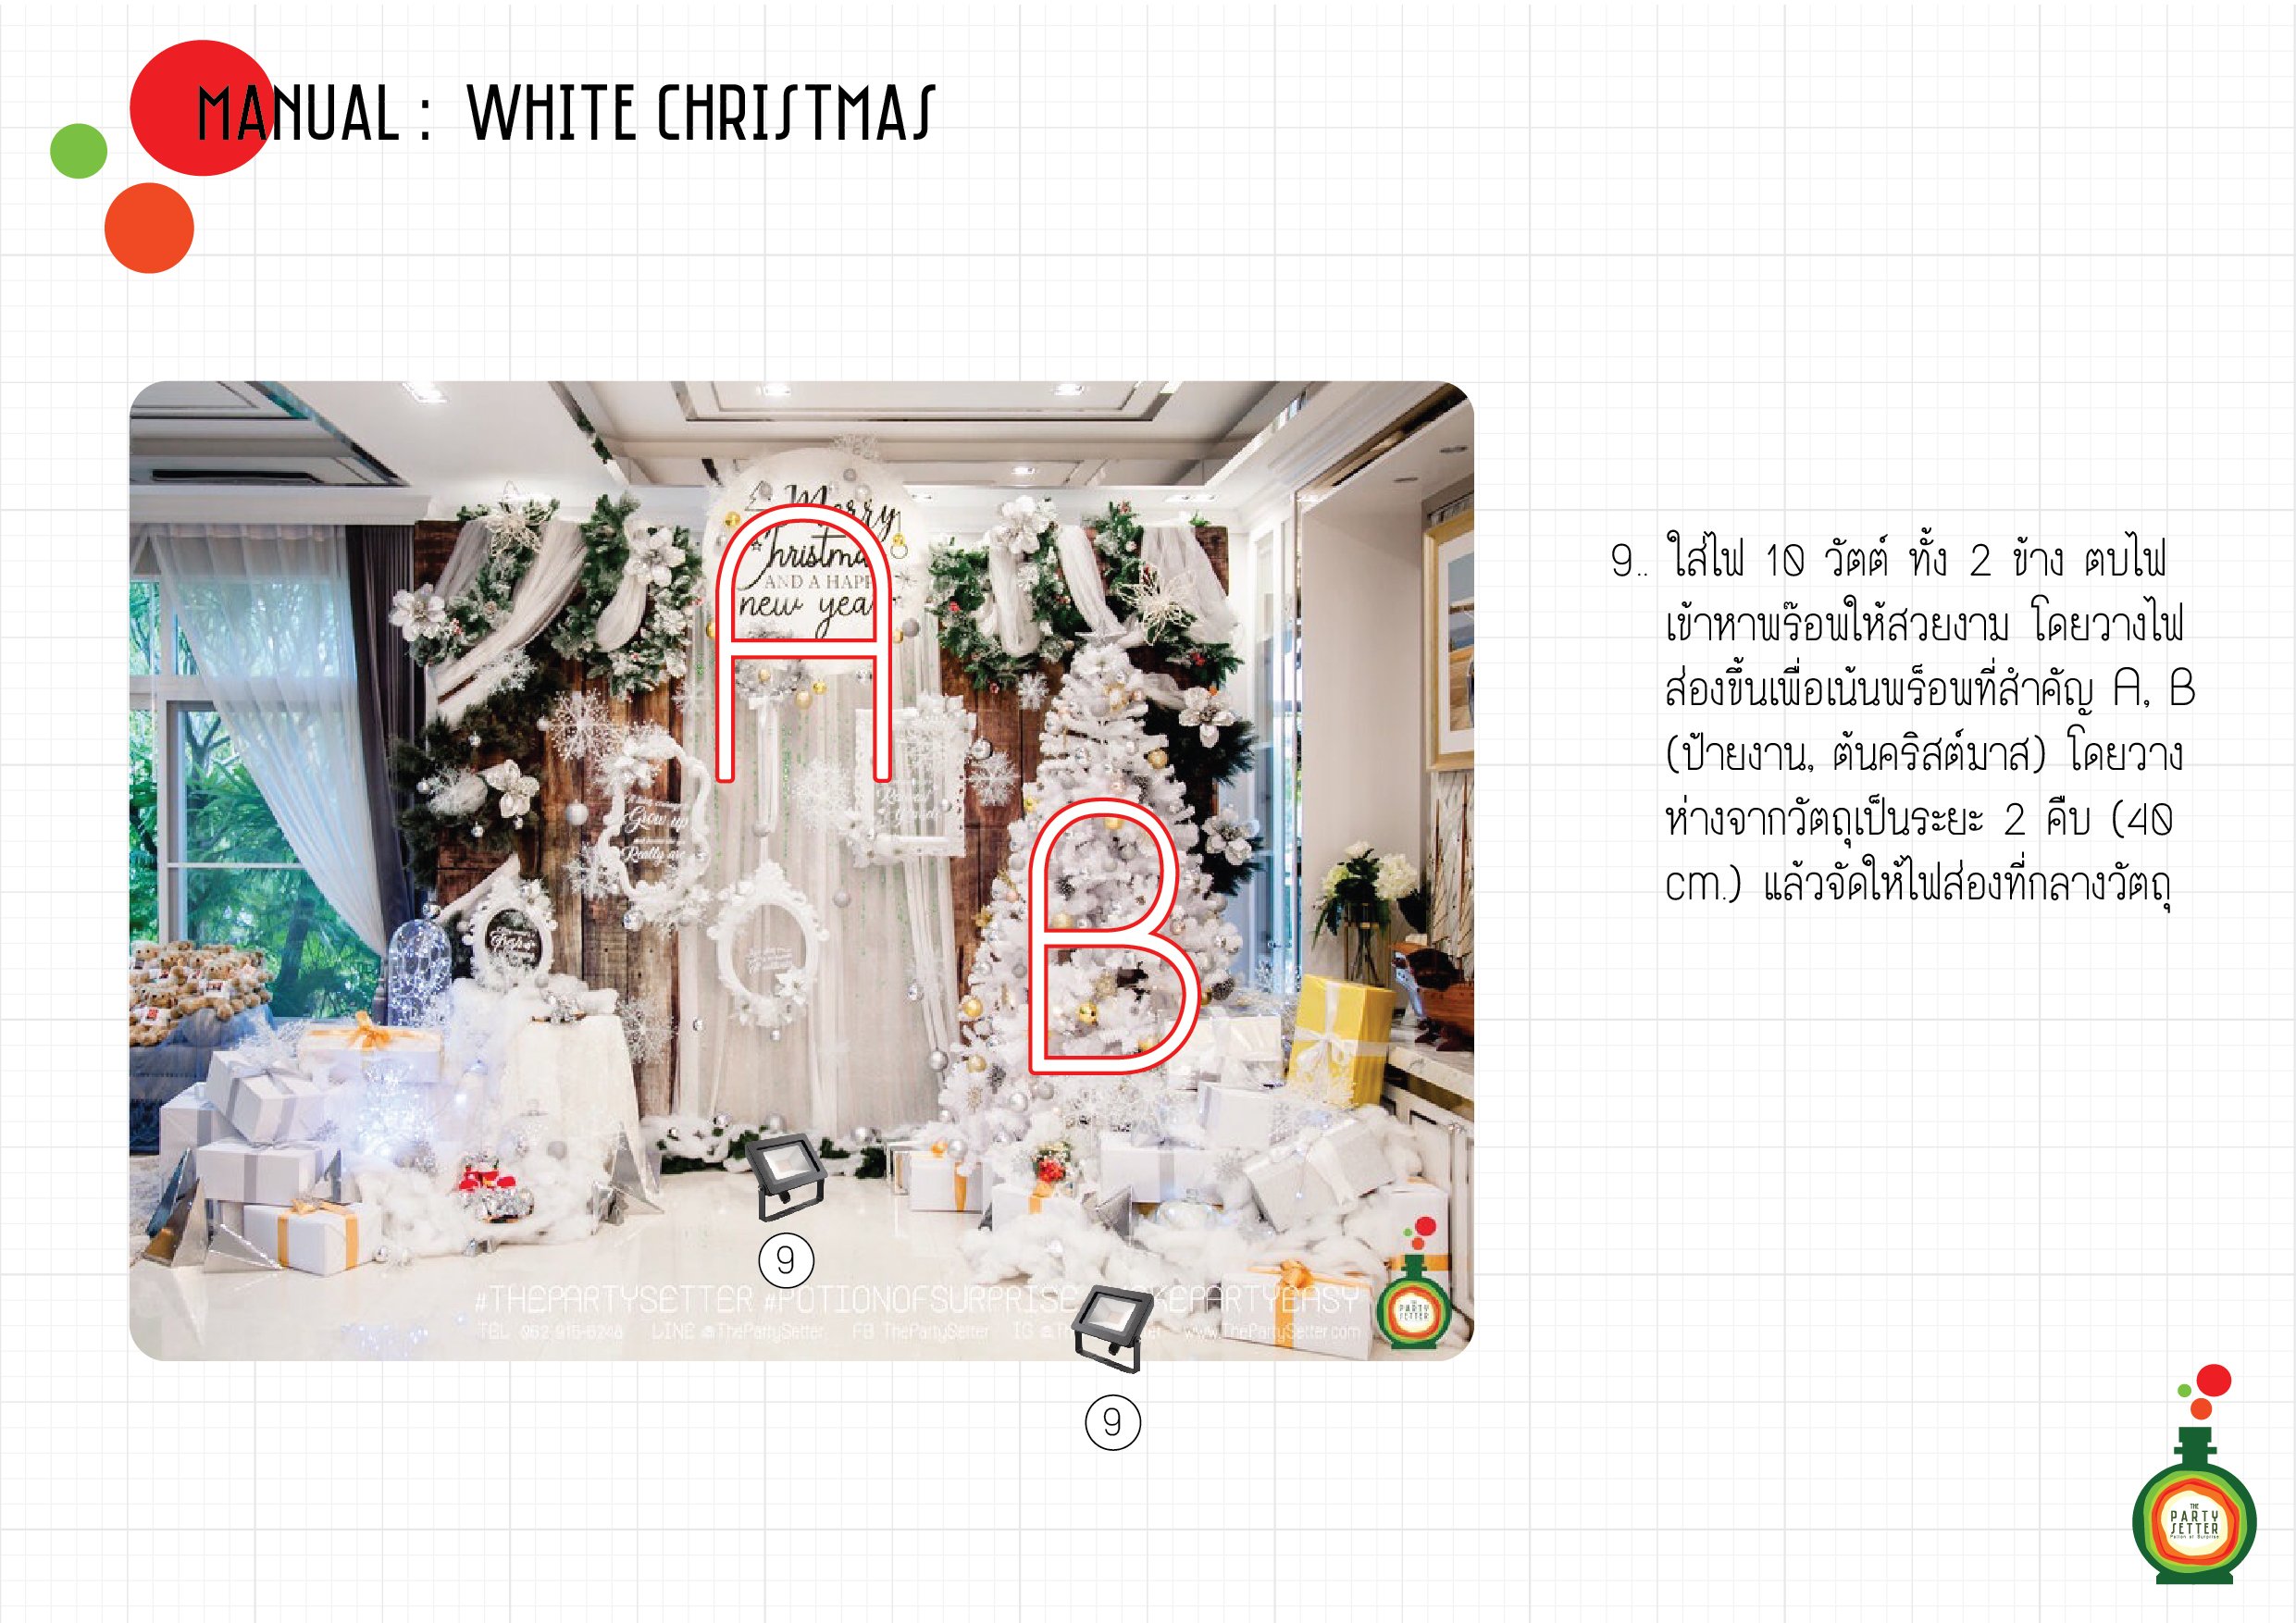 Manual_White Christmas-09-01.jpg